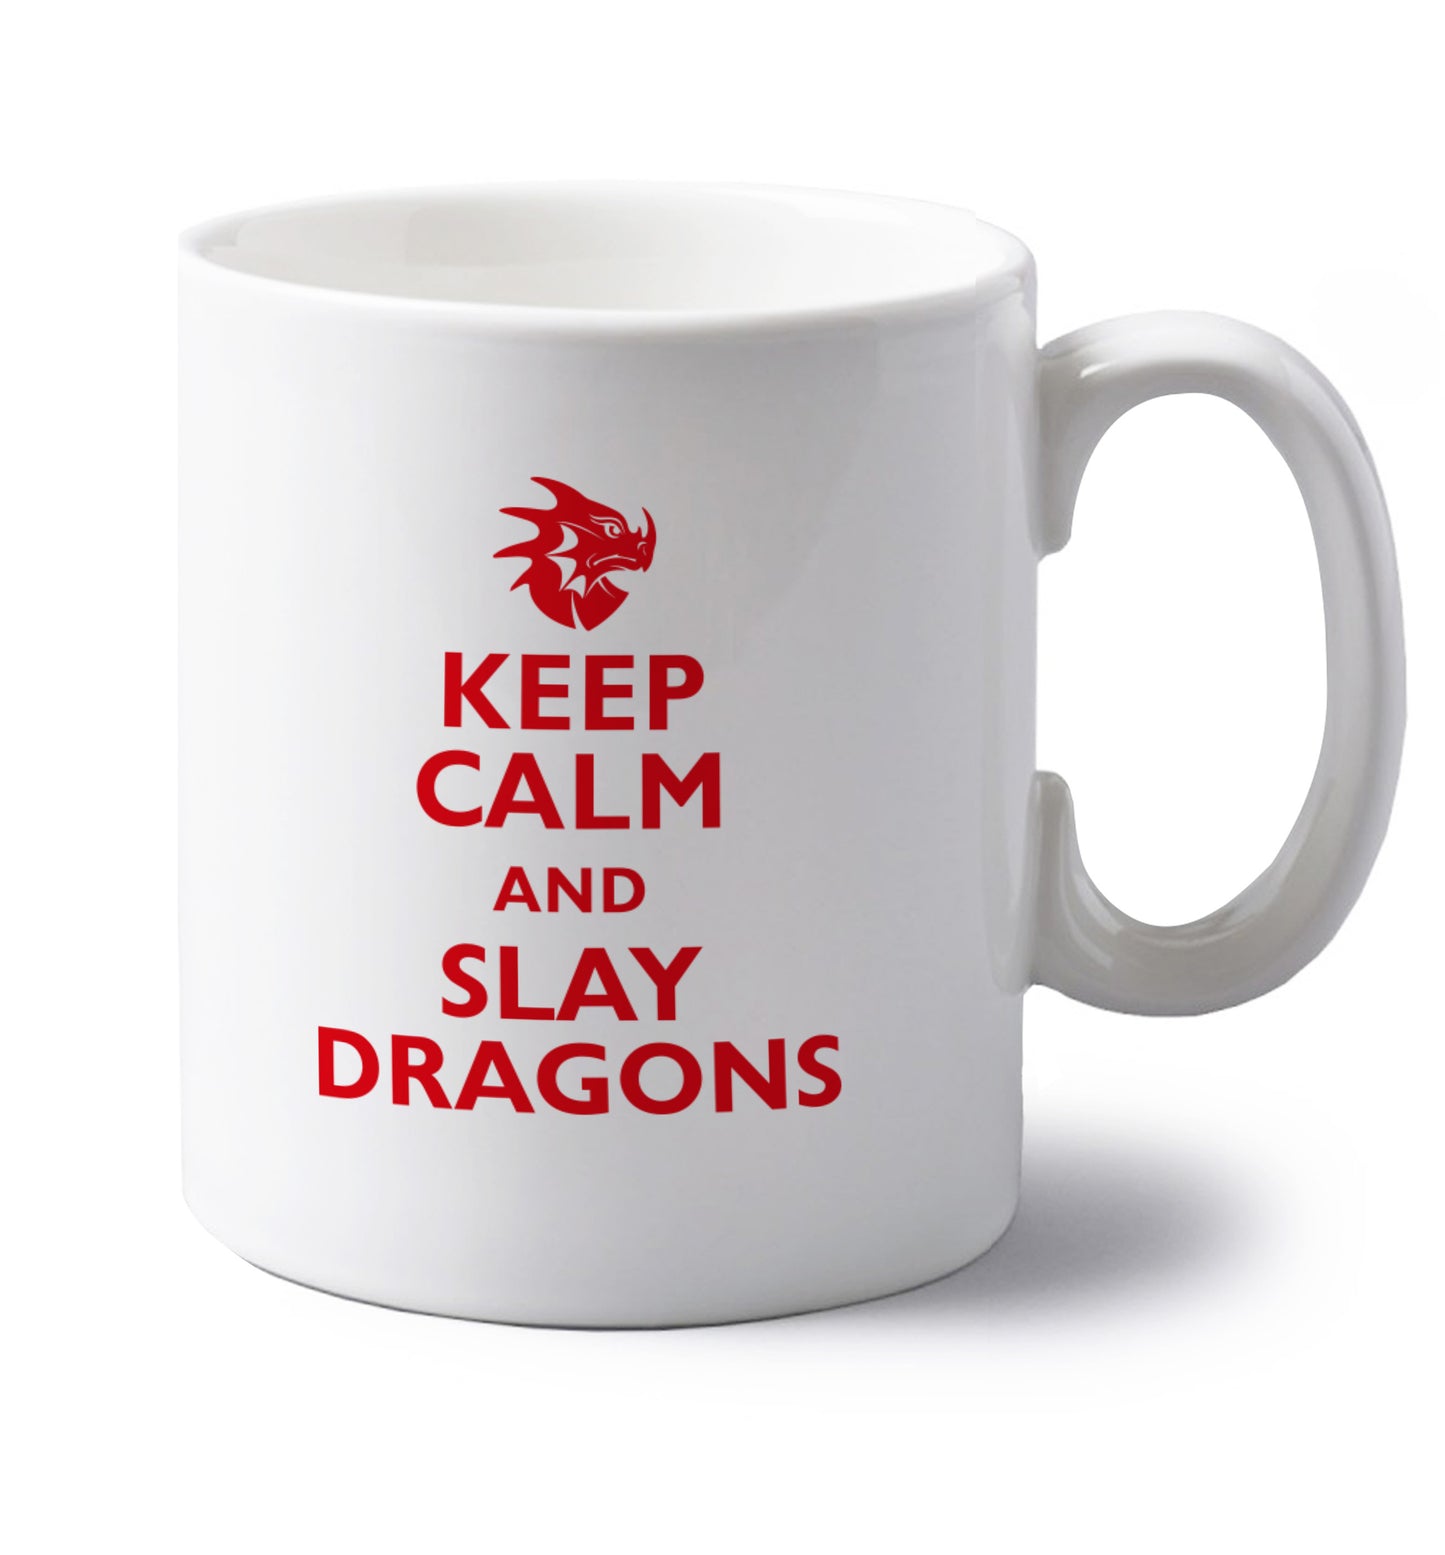 Keep calm and slay dragons left handed white ceramic mug 